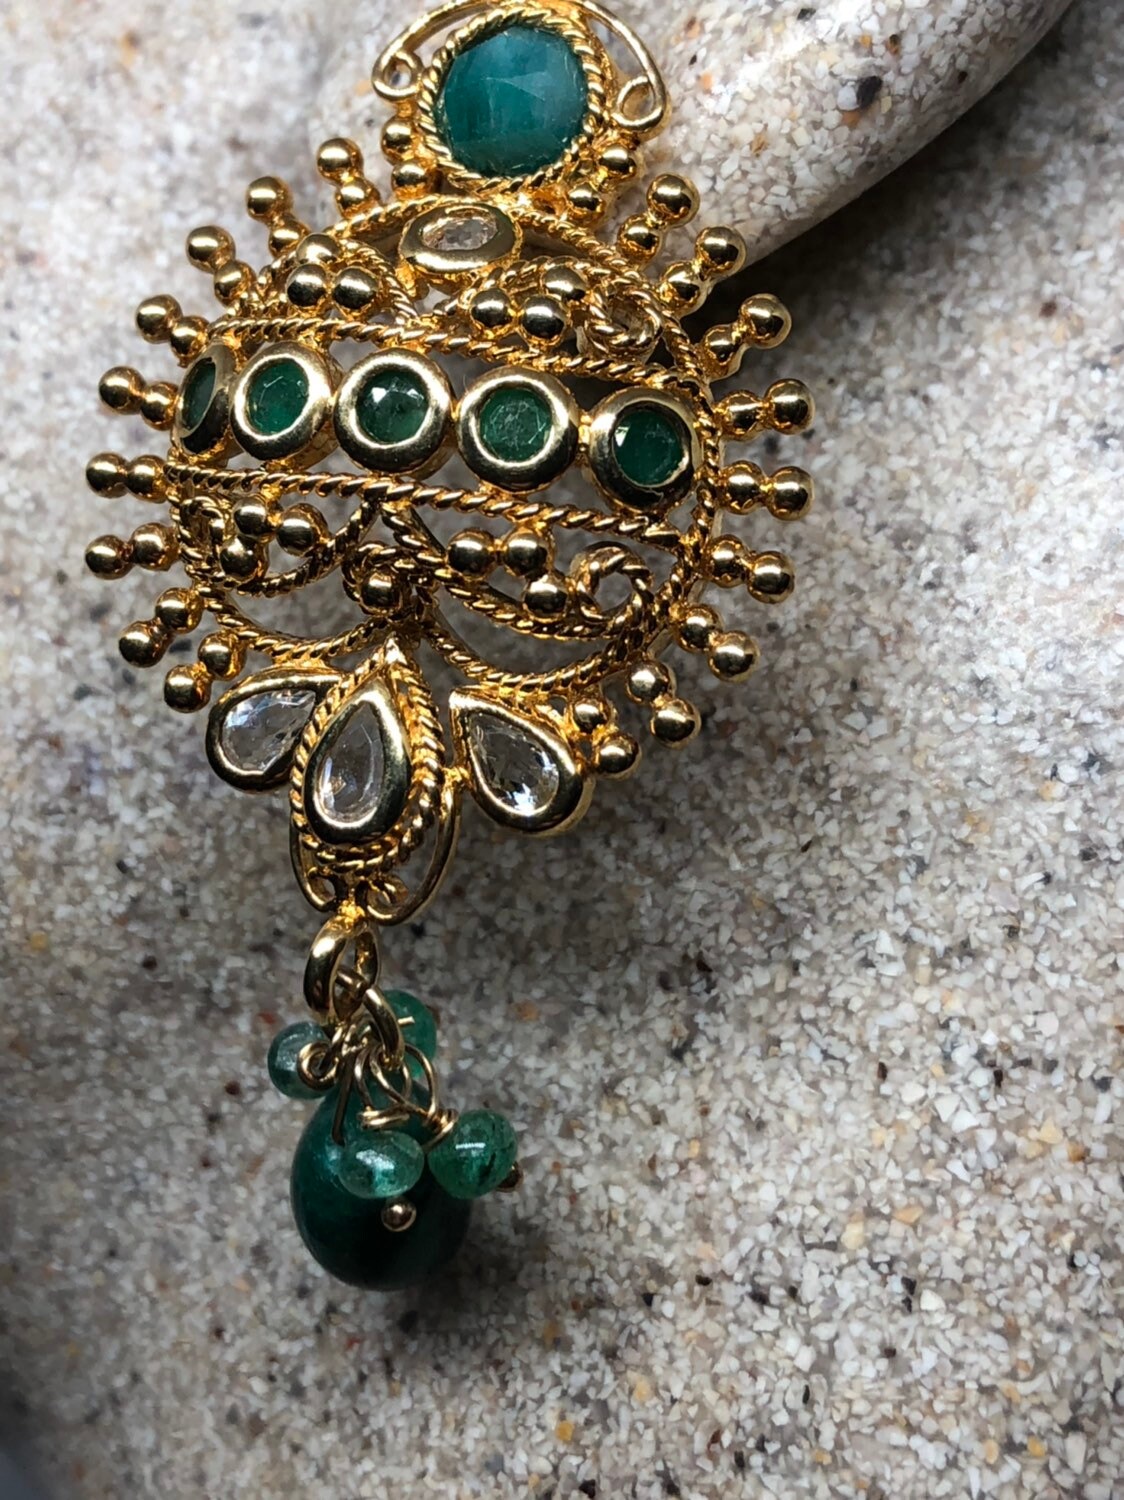 Vintage Handmade Sterling Silver Genuine Green Emerald White Sapphire Stud button Earrings